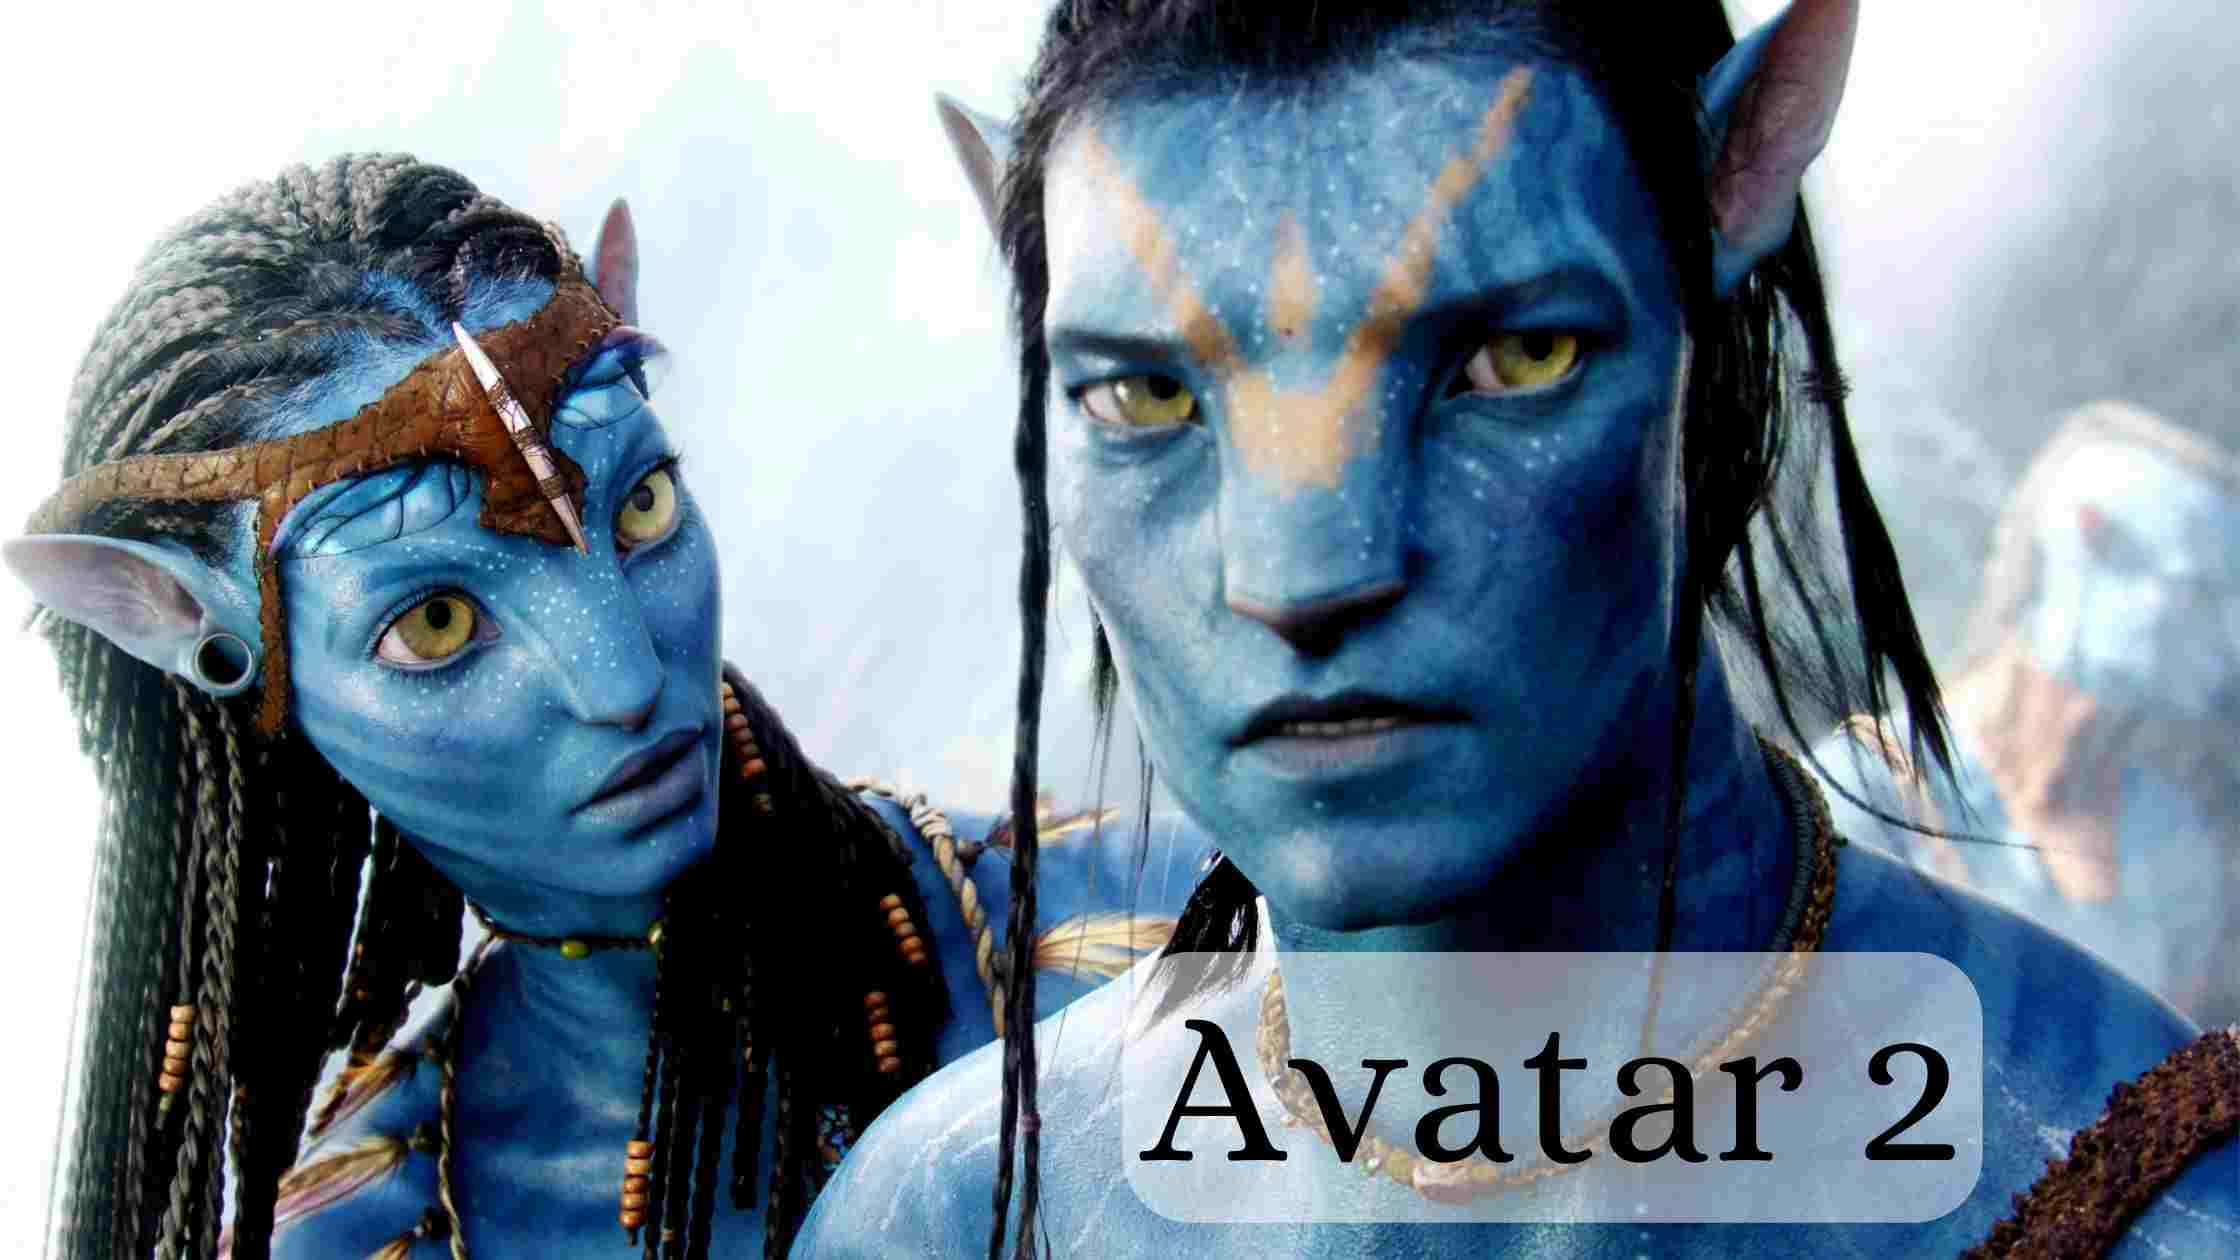 Avatar 2 Release Date on OTT